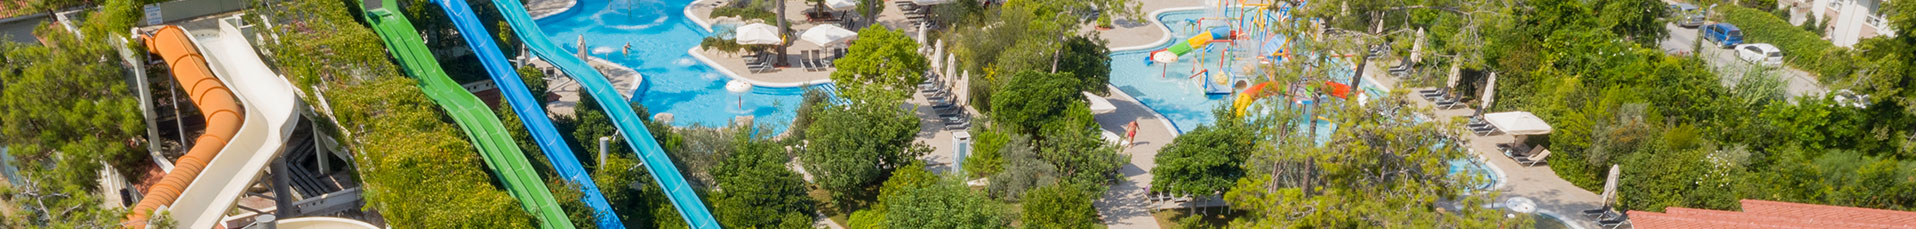 Ali Bey Resort Sorgun - Waterpark